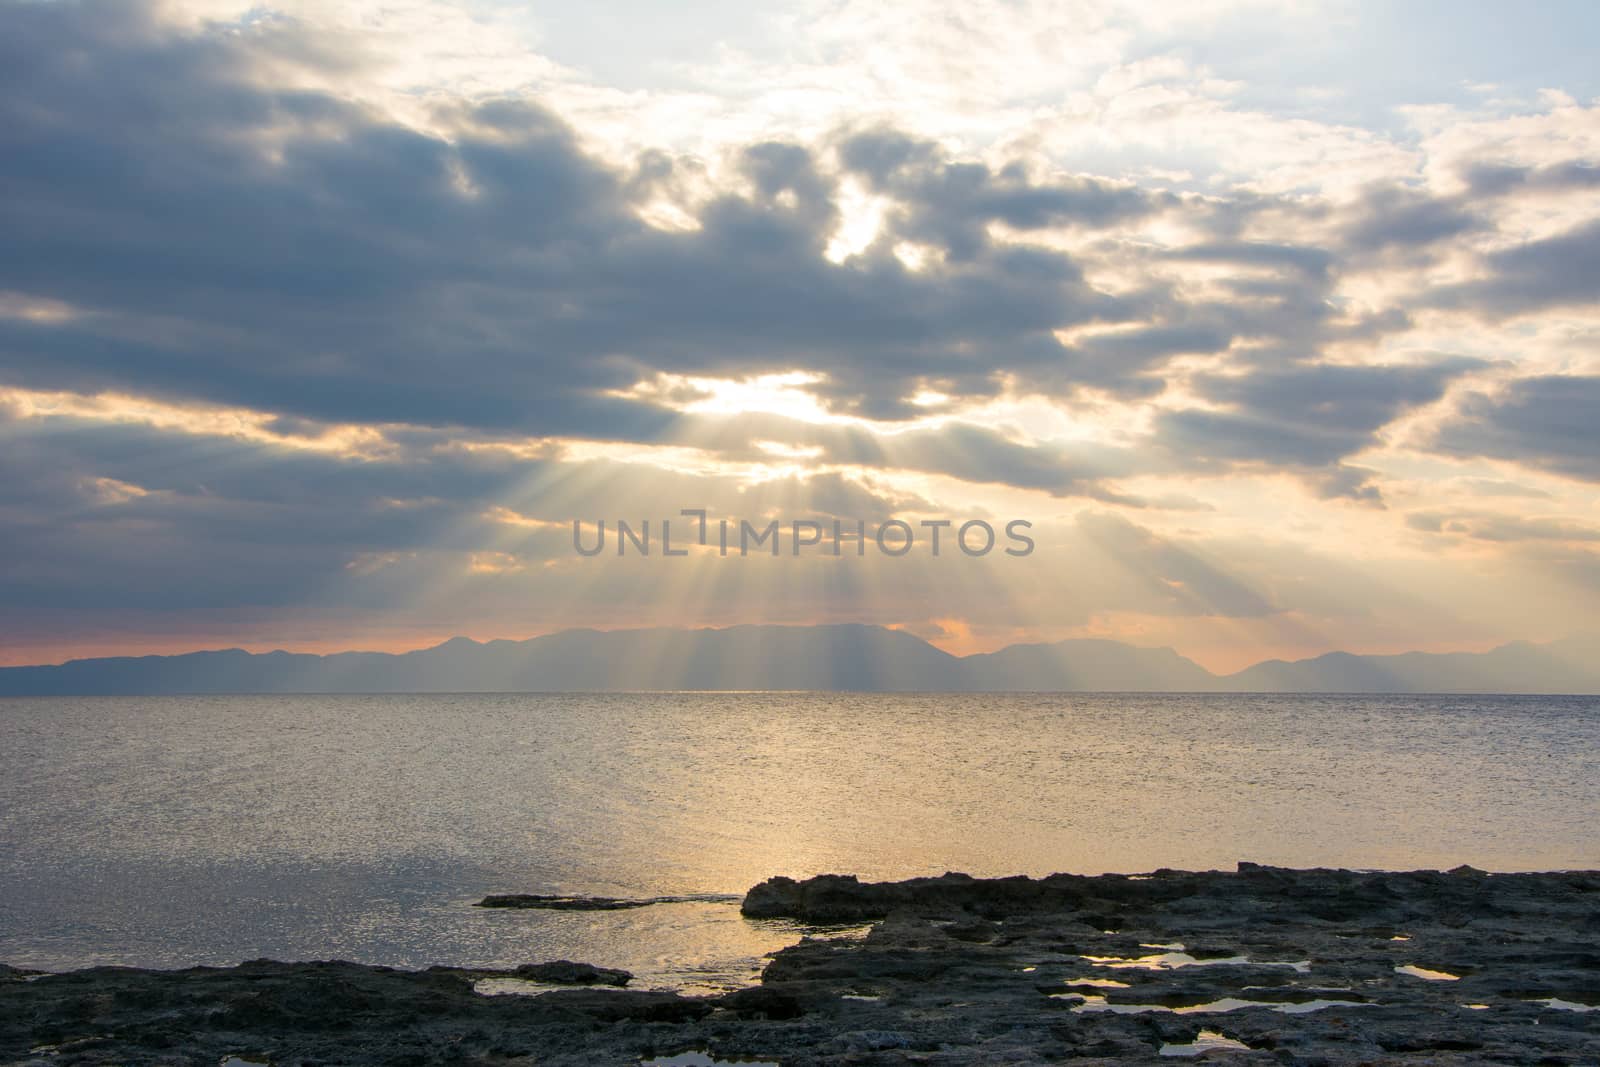 One wonderful sunset at a rocky Greek beach in Peloponnese, Greece.